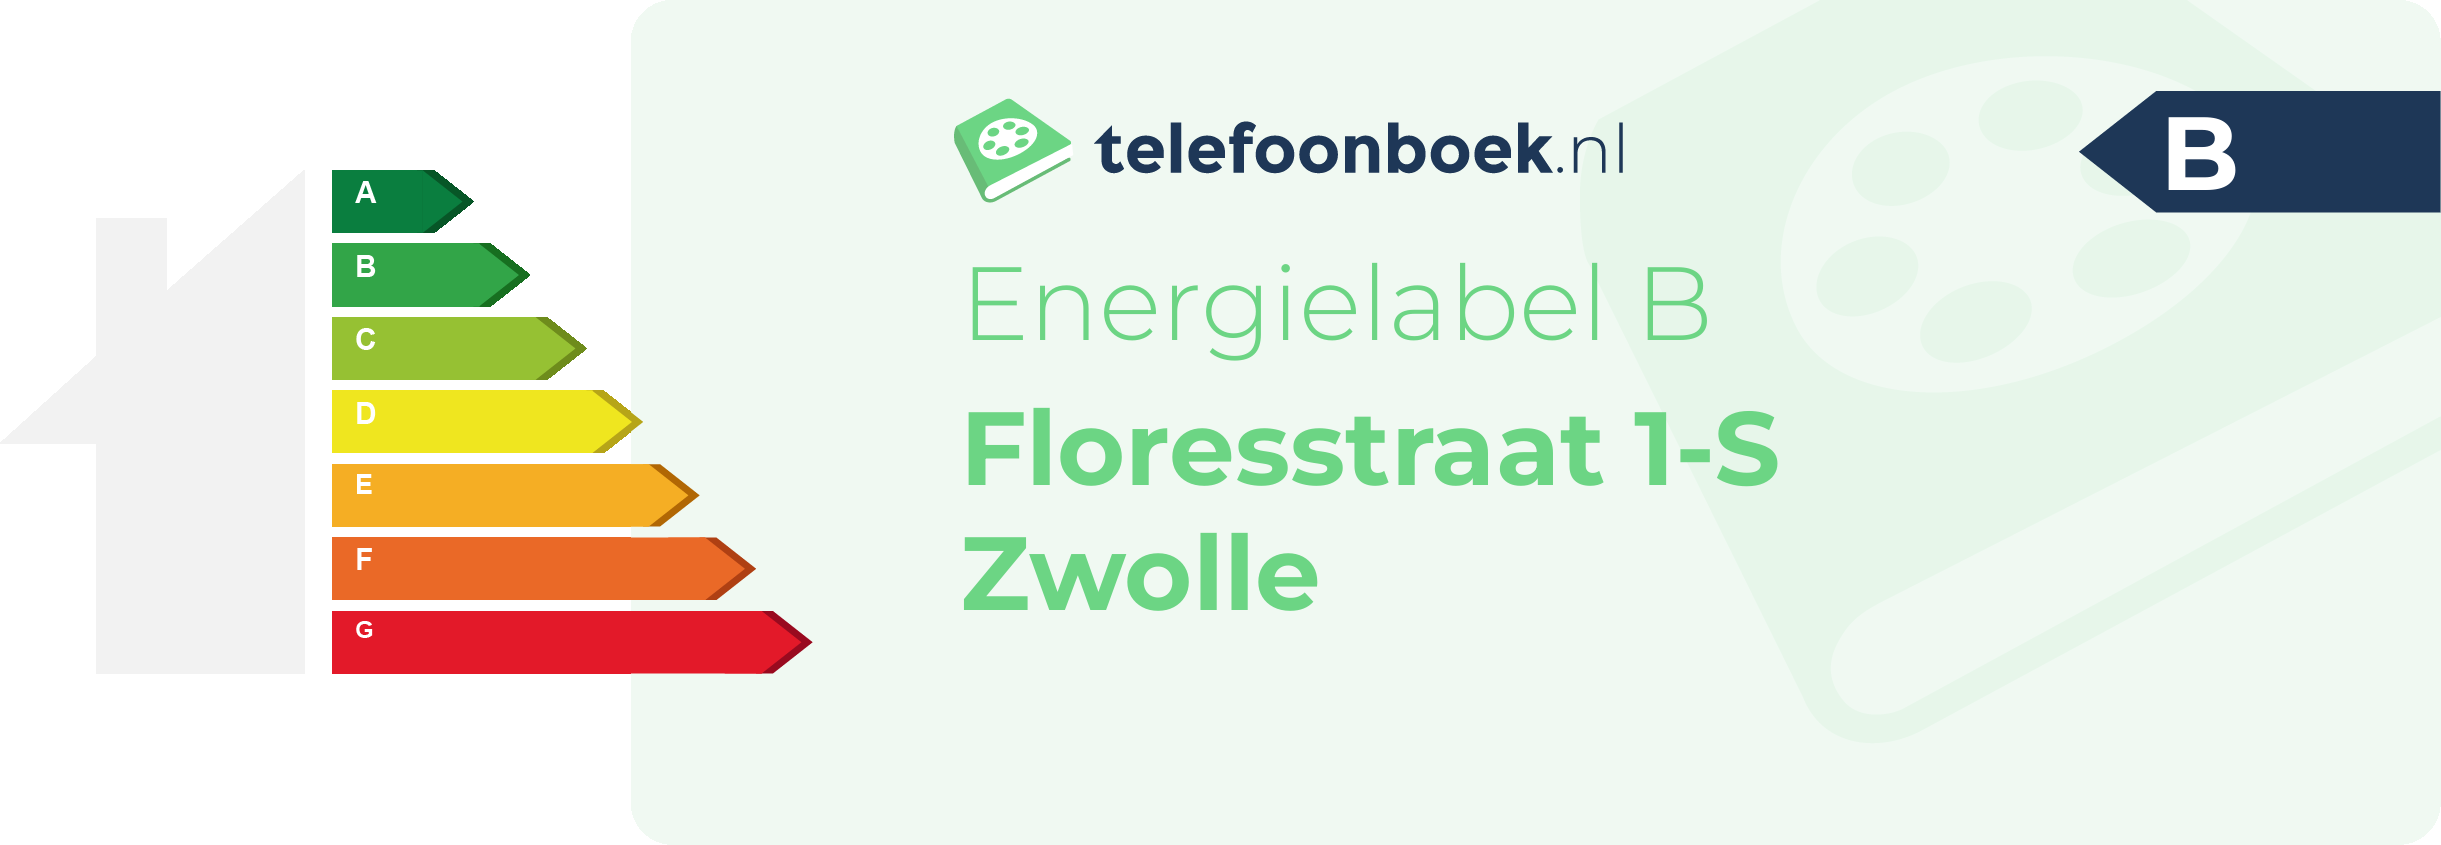 Energielabel Floresstraat 1-S Zwolle